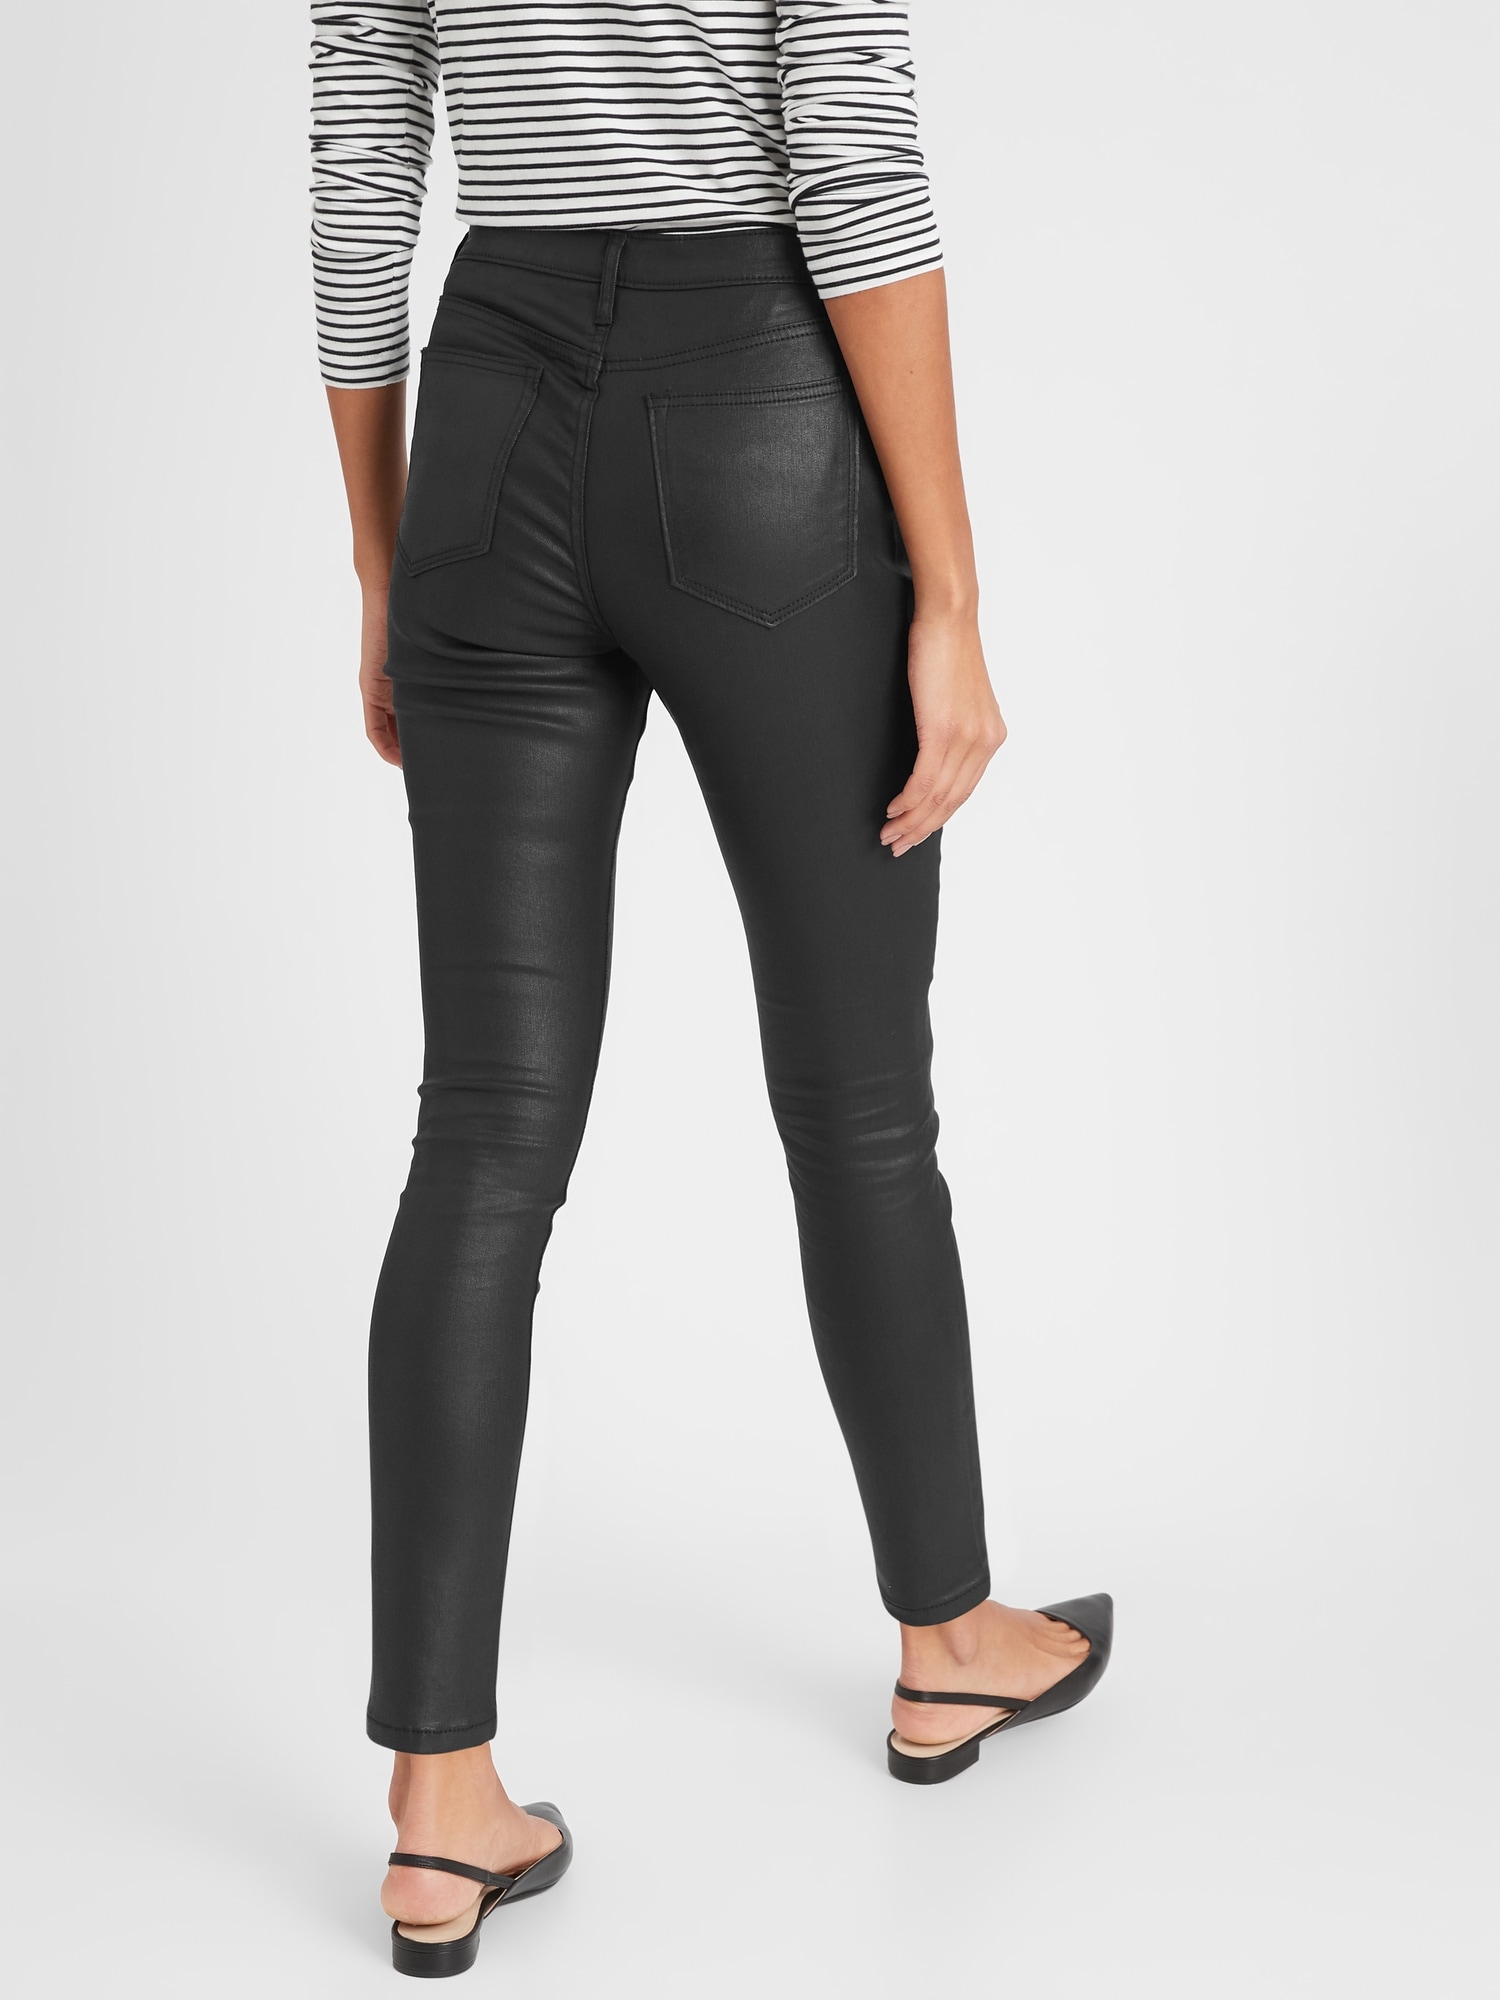 black coated jeans plus size